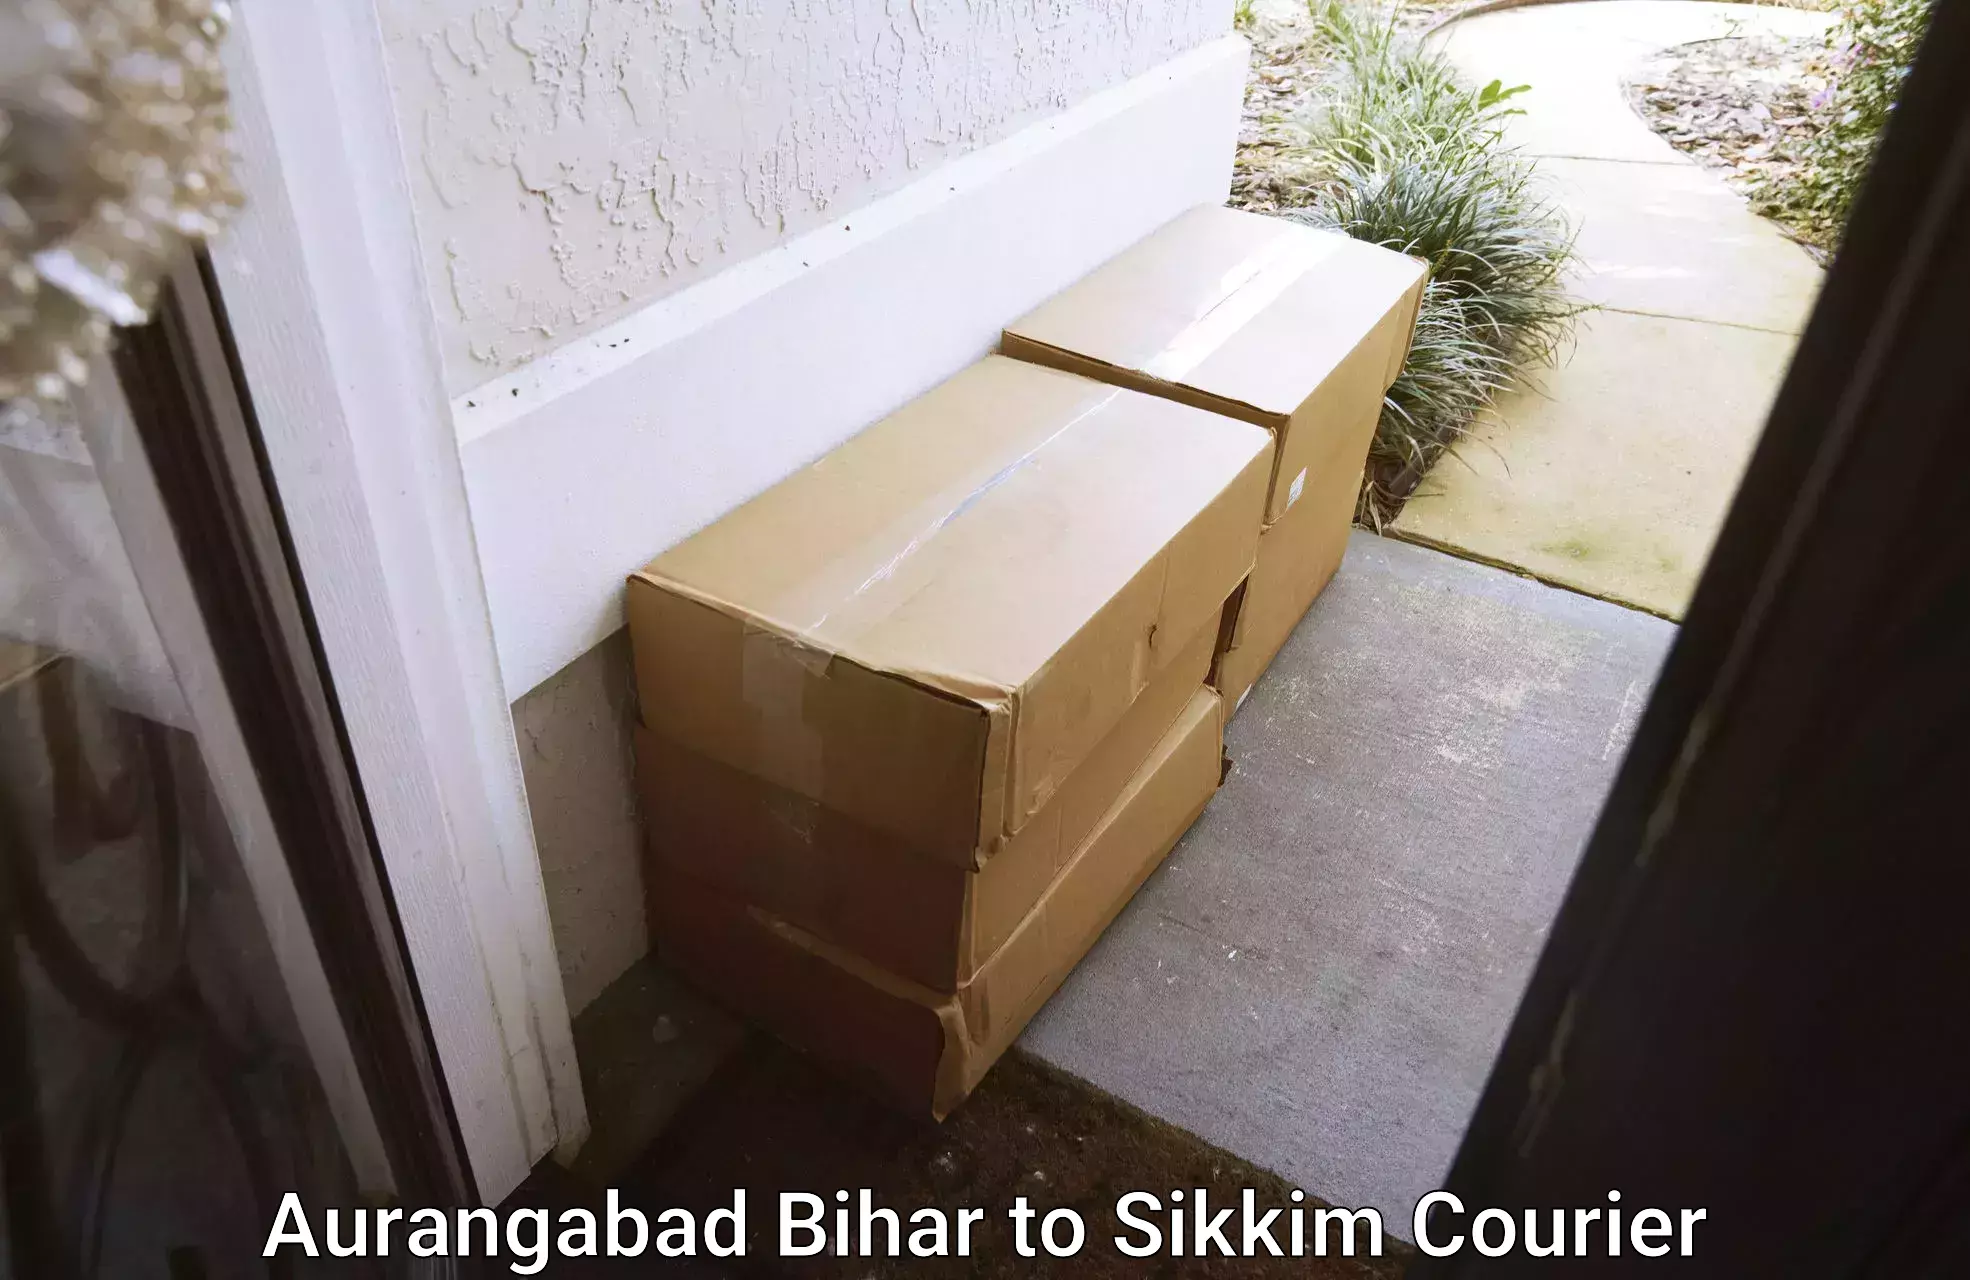 Trusted moving company Aurangabad Bihar to Sikkim